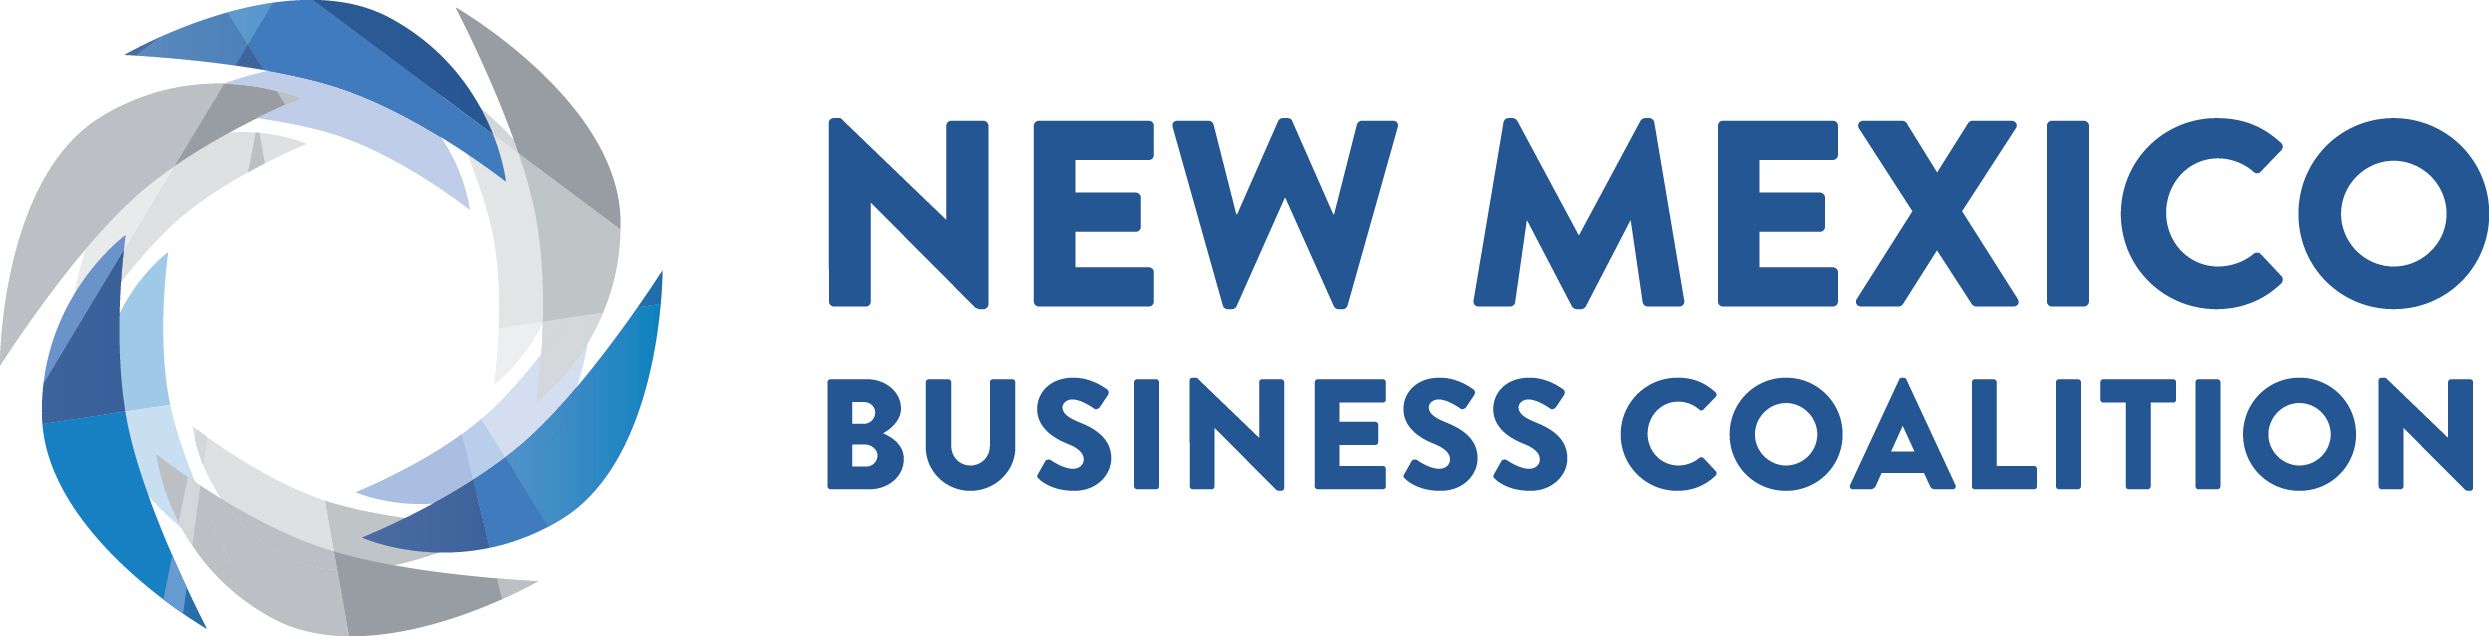 New Mexico Business Coalition logo